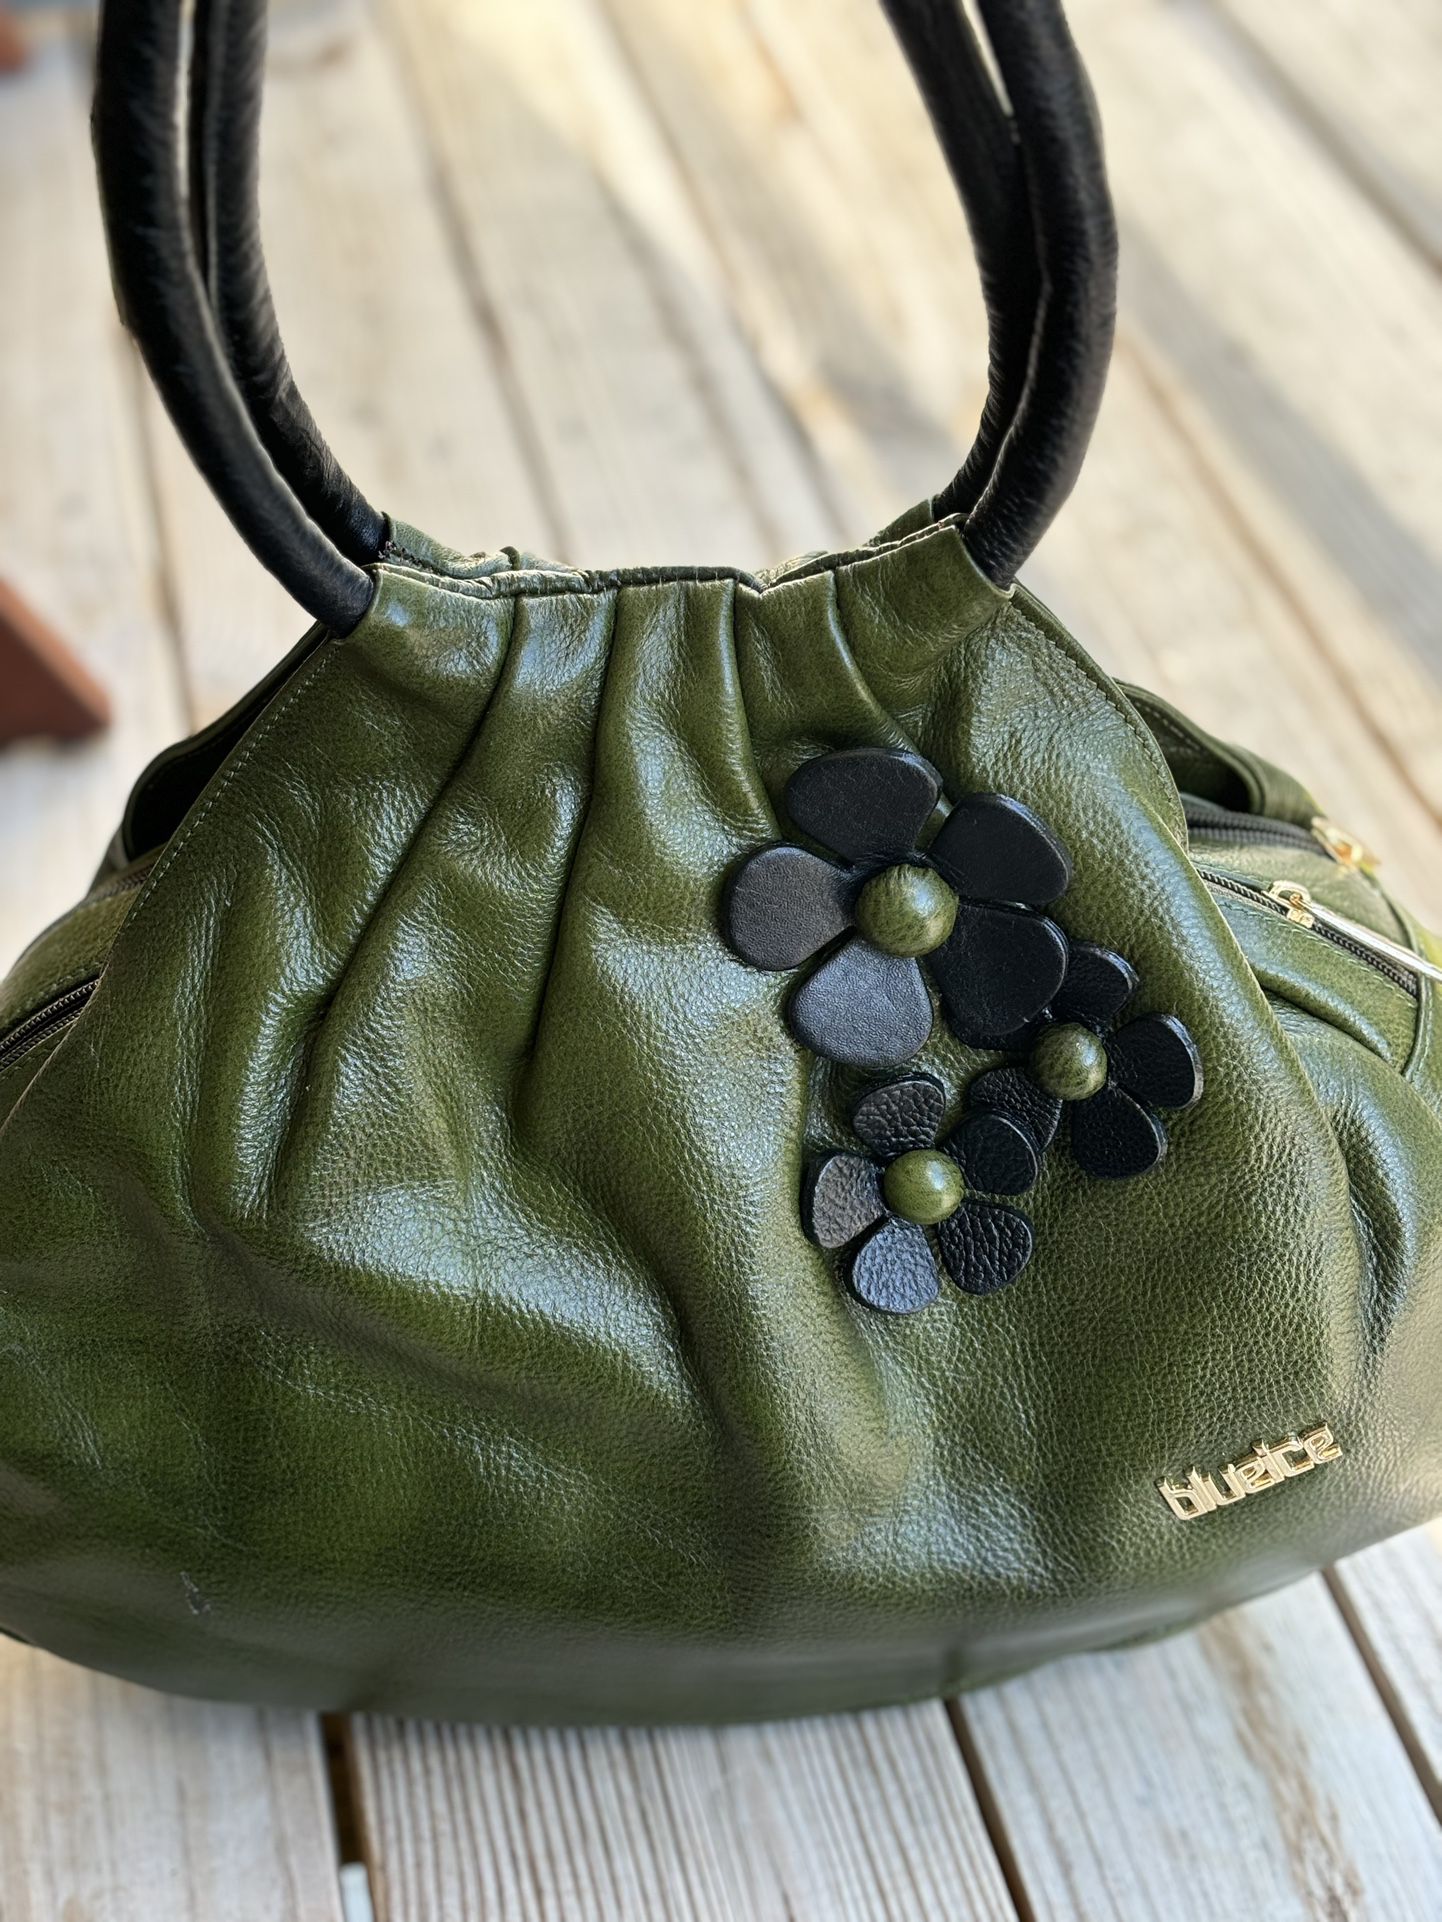 Stylish Oliver Color Genuine Leather Women’s Handbag 